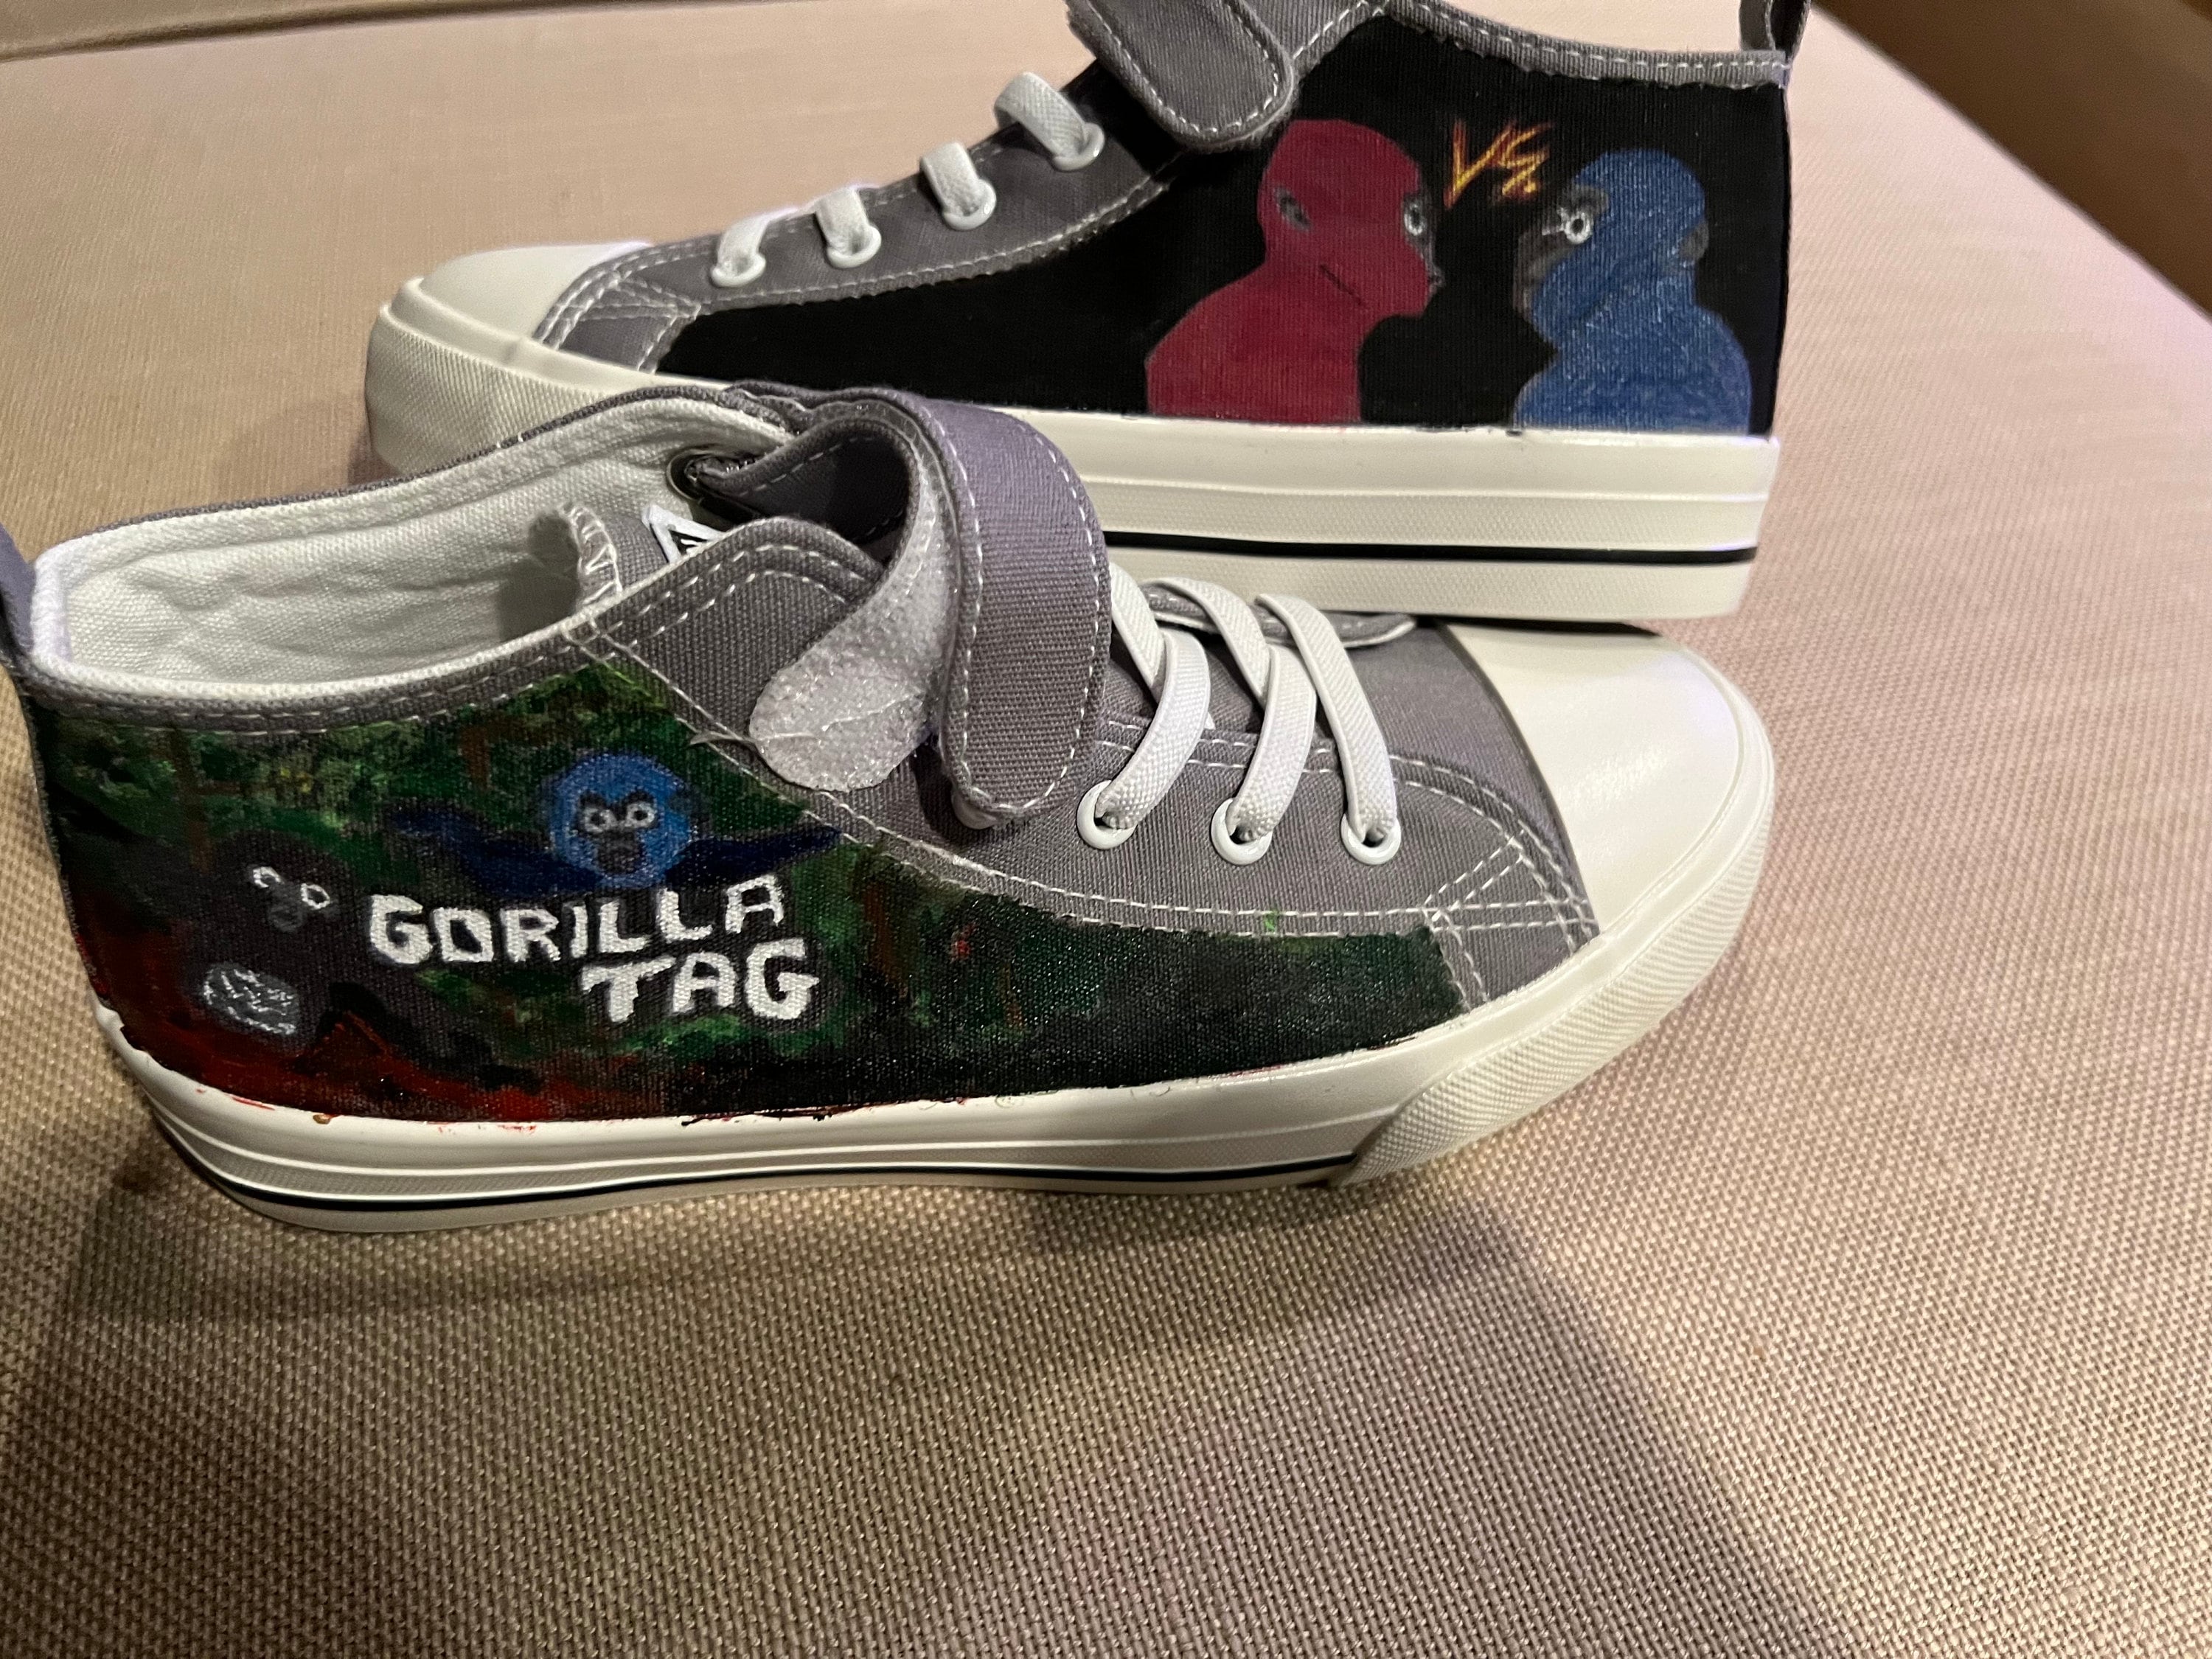 Gorilla Tag Shoes, High-Top Sneakers, Handmade Footwear • Onyx Prints